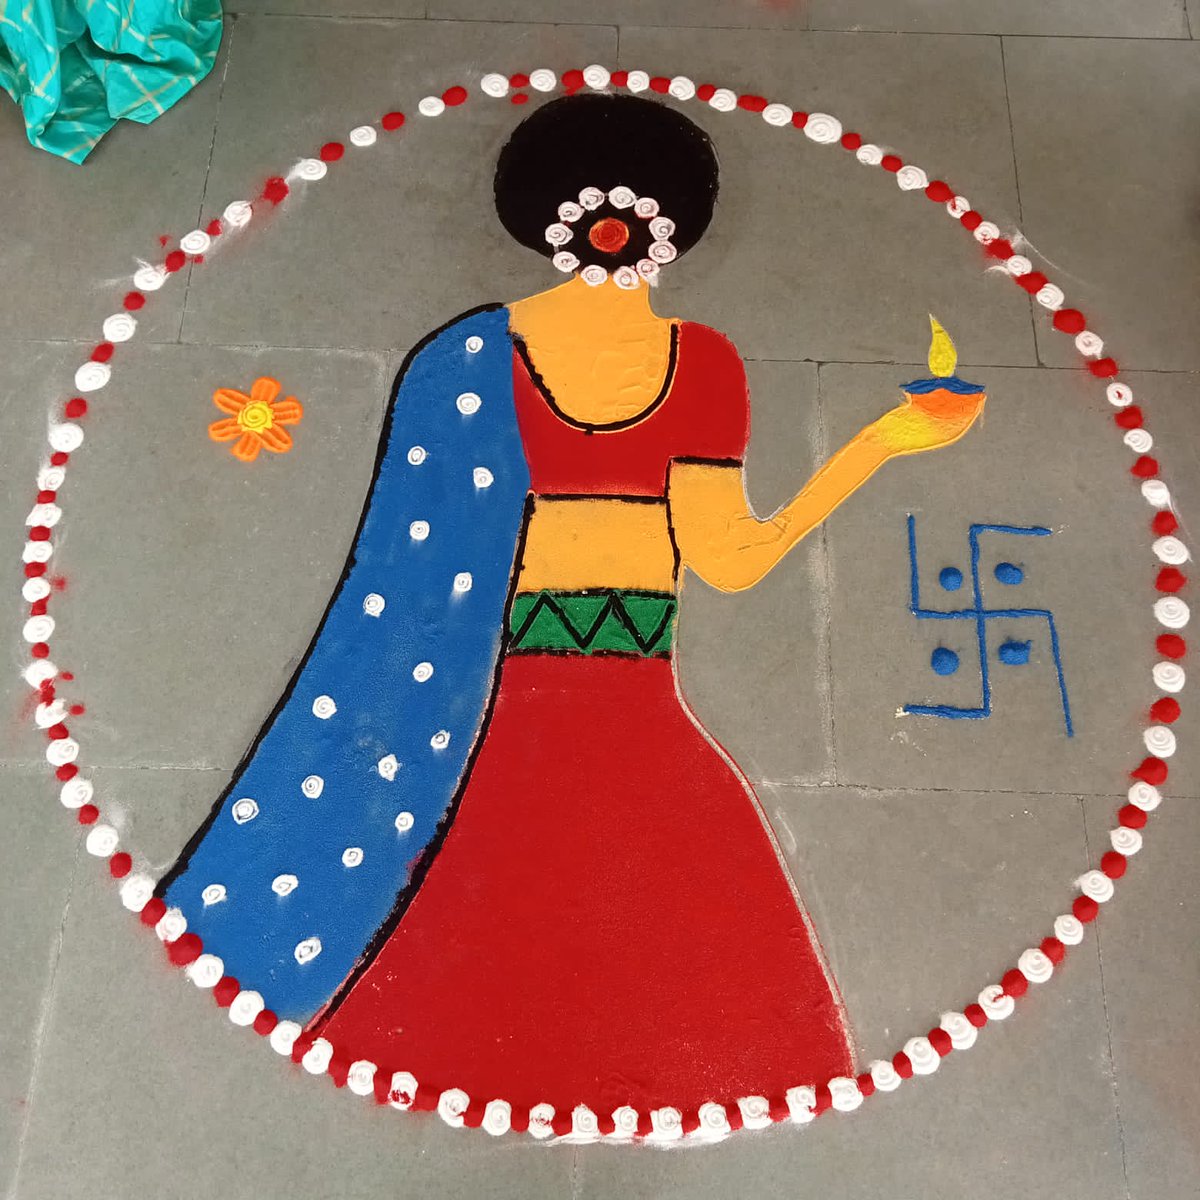 #HappyDhanteras
#HappyDiwali 
Beautiful rangoli made by students